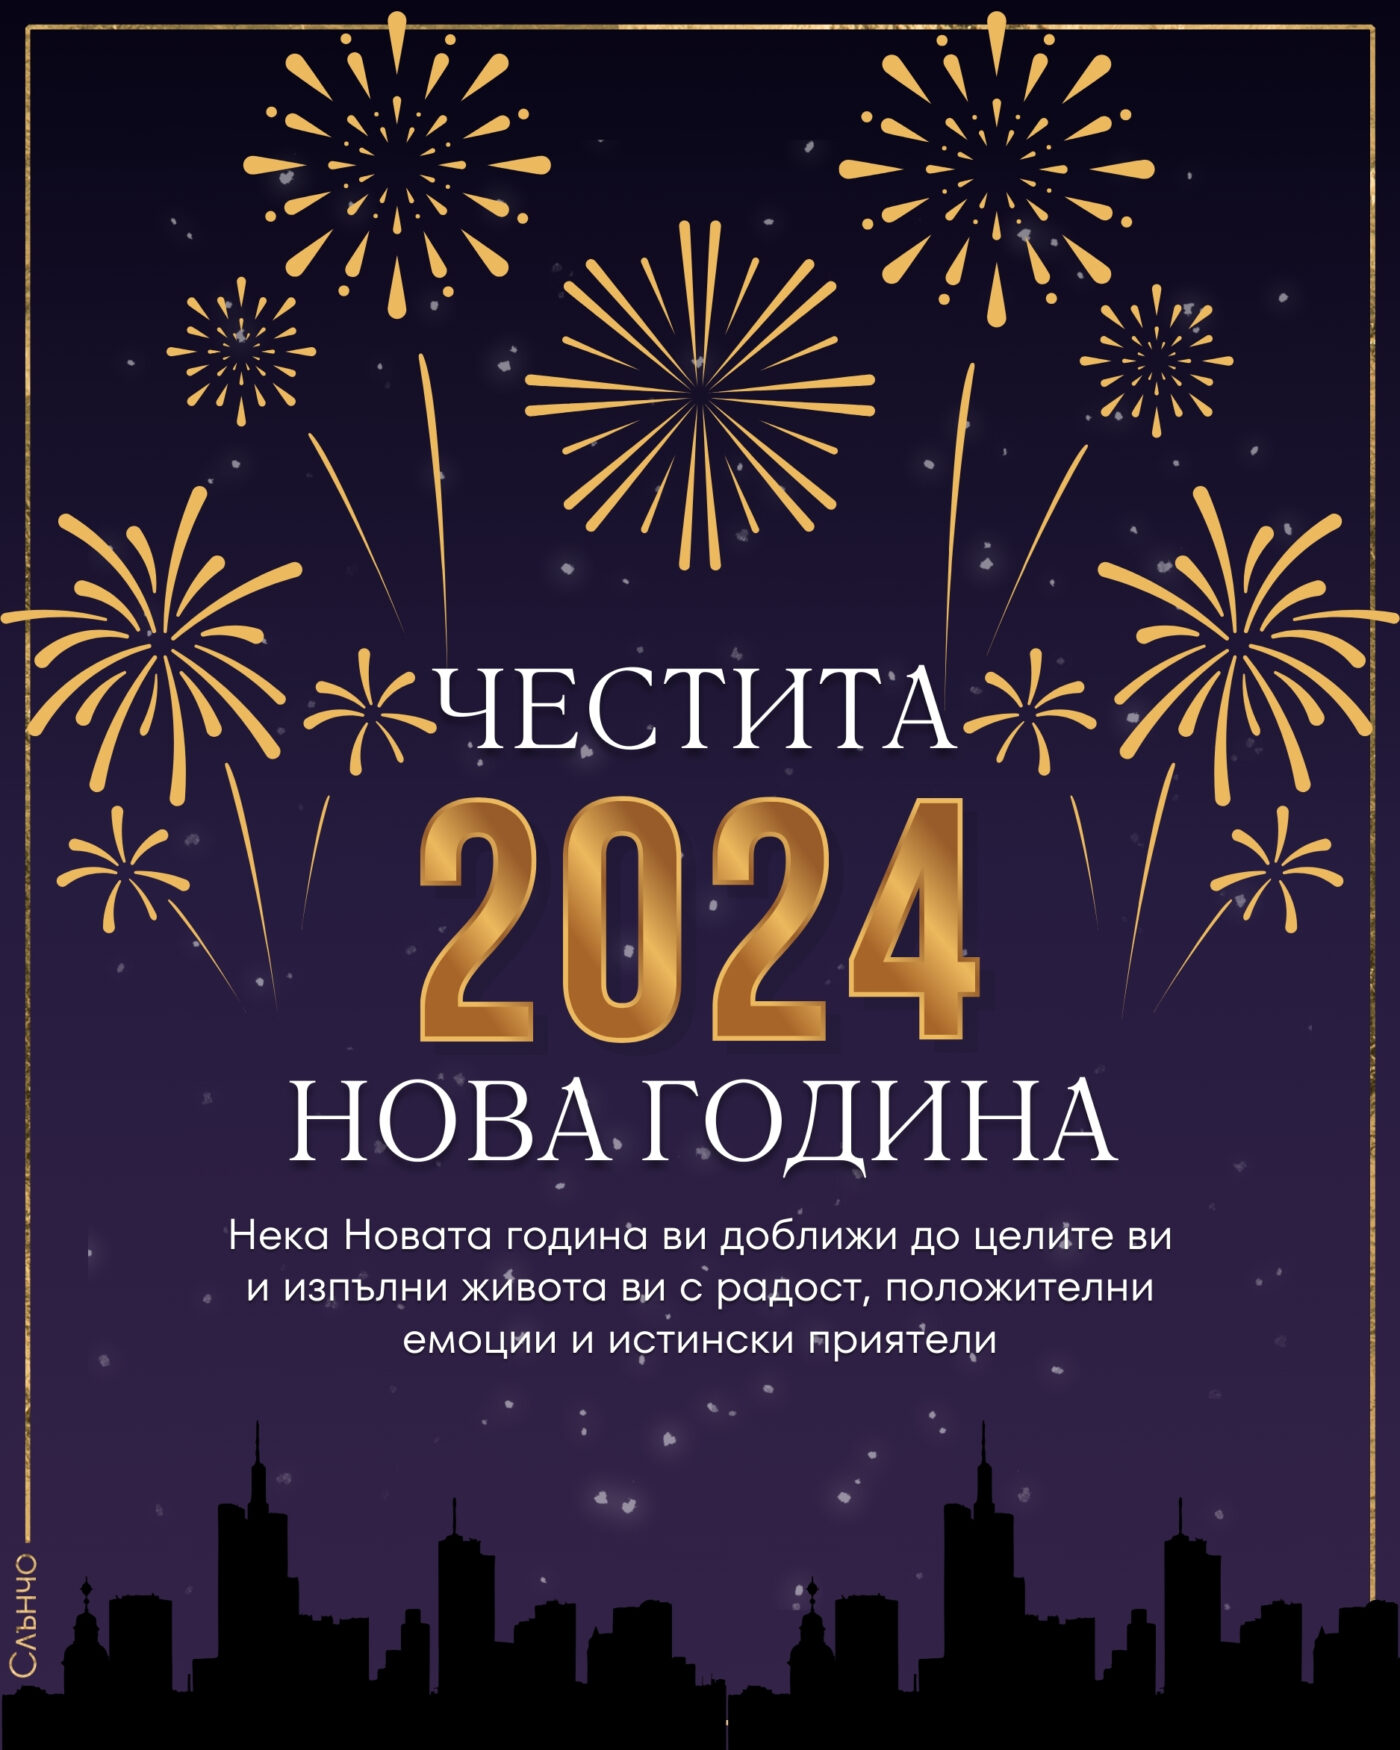 Нека Новата година 2024, Честита Нова година 2024, честита нова година 2024, новогодишни картички, картички за нова година 2024, слънчо обичкам те, слънчо